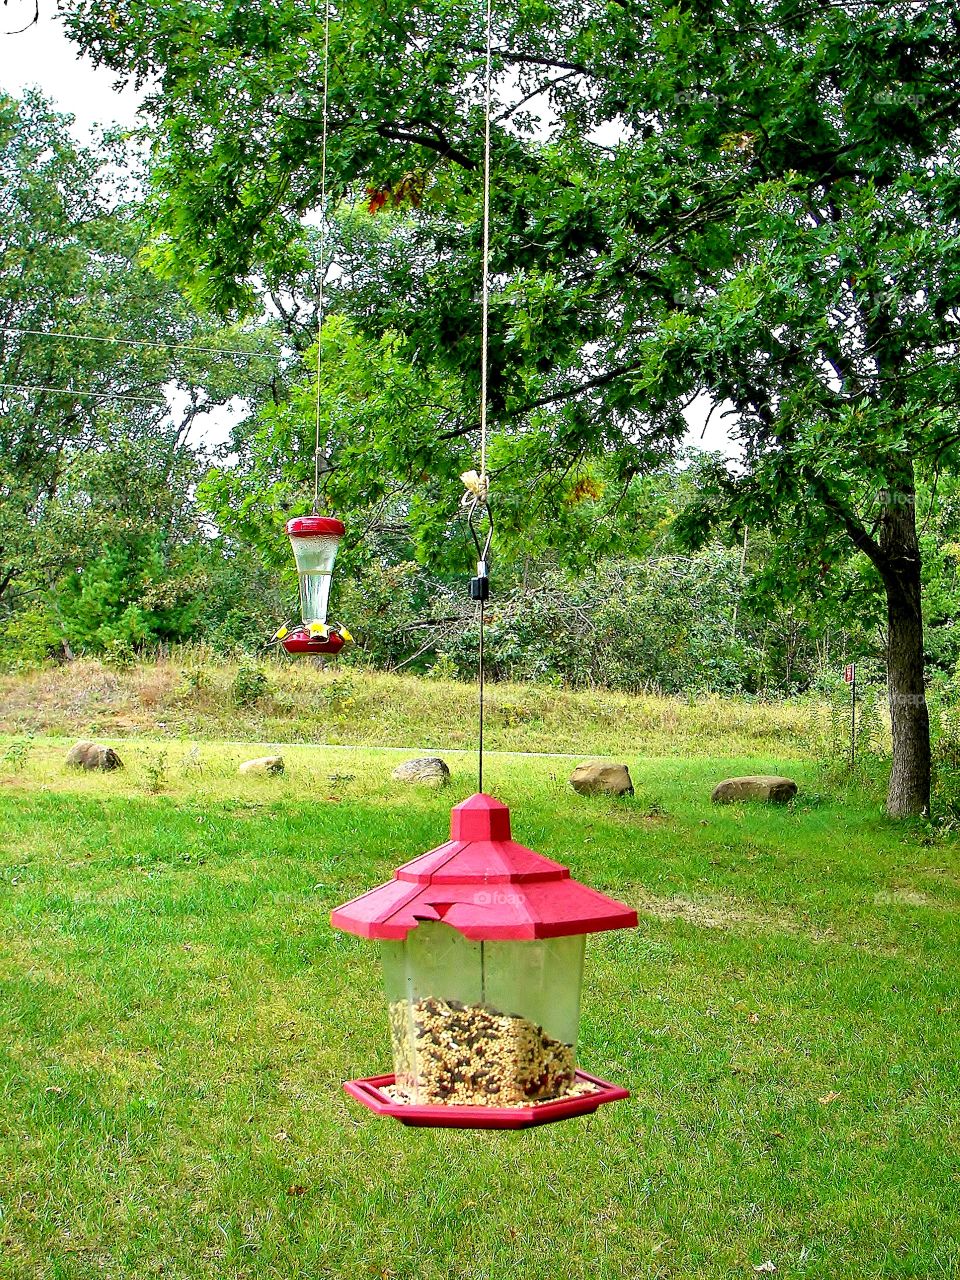 Bird feeder in yard